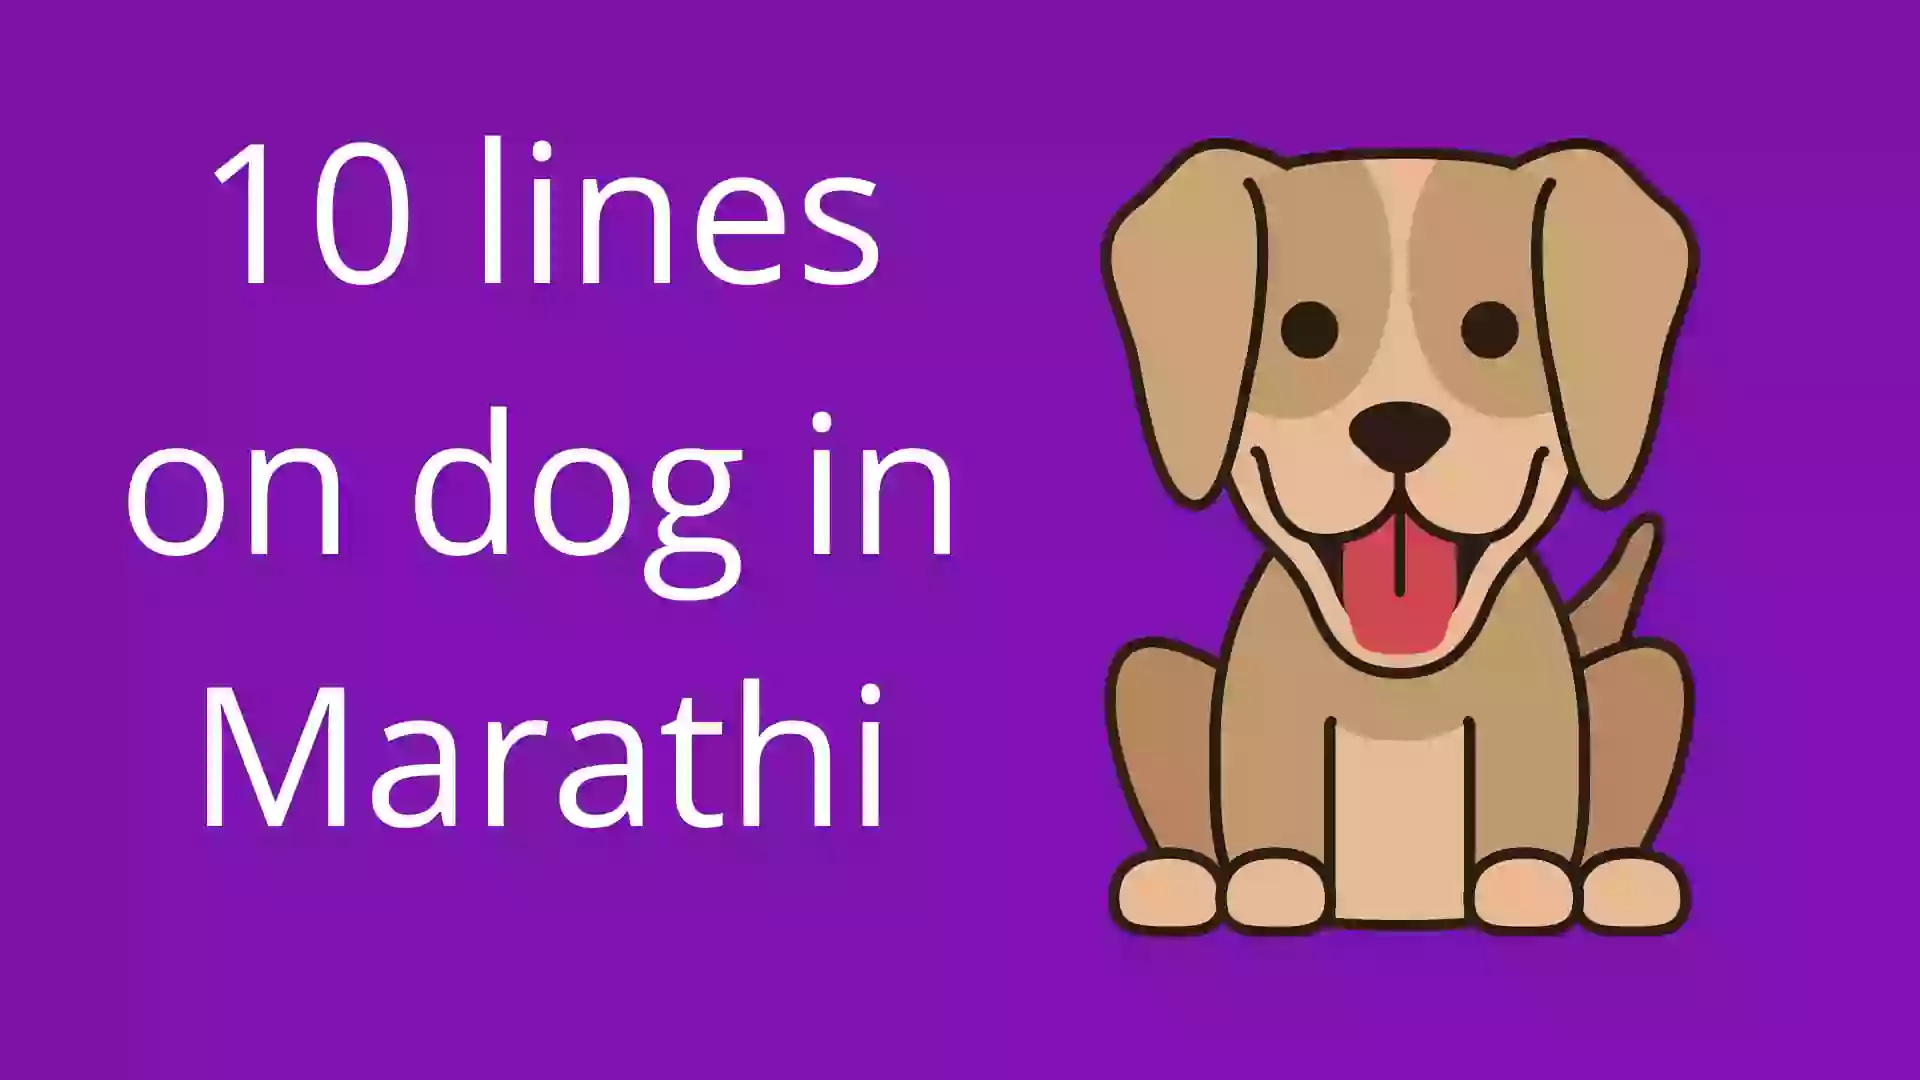 dog essay in marathi 10 lines